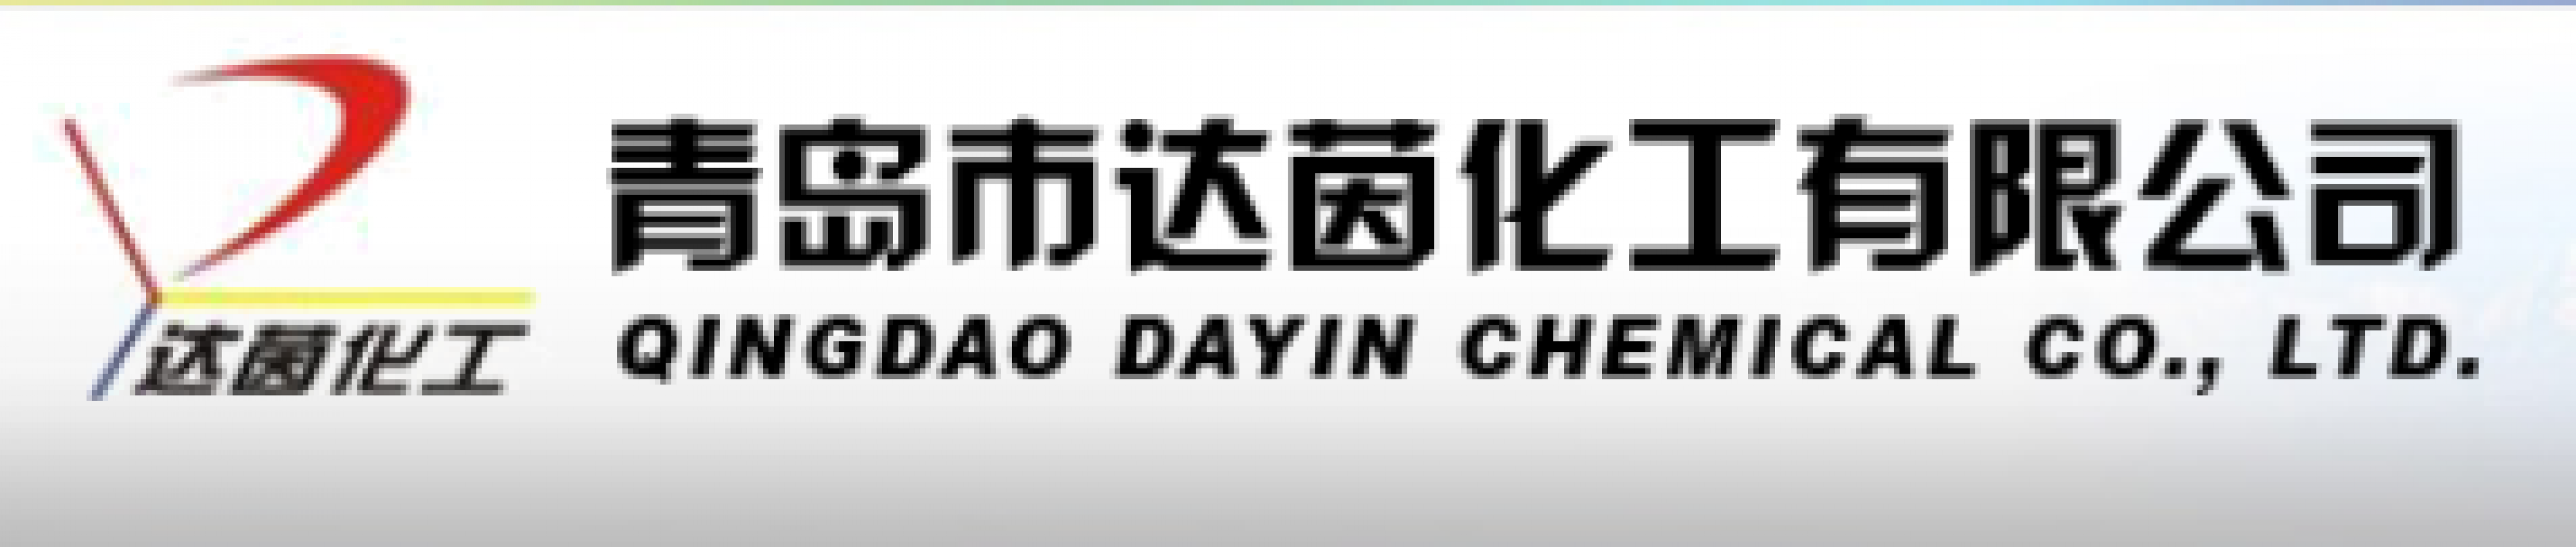 Qingdao Dayin Chemicals Industry Co., Ltd.